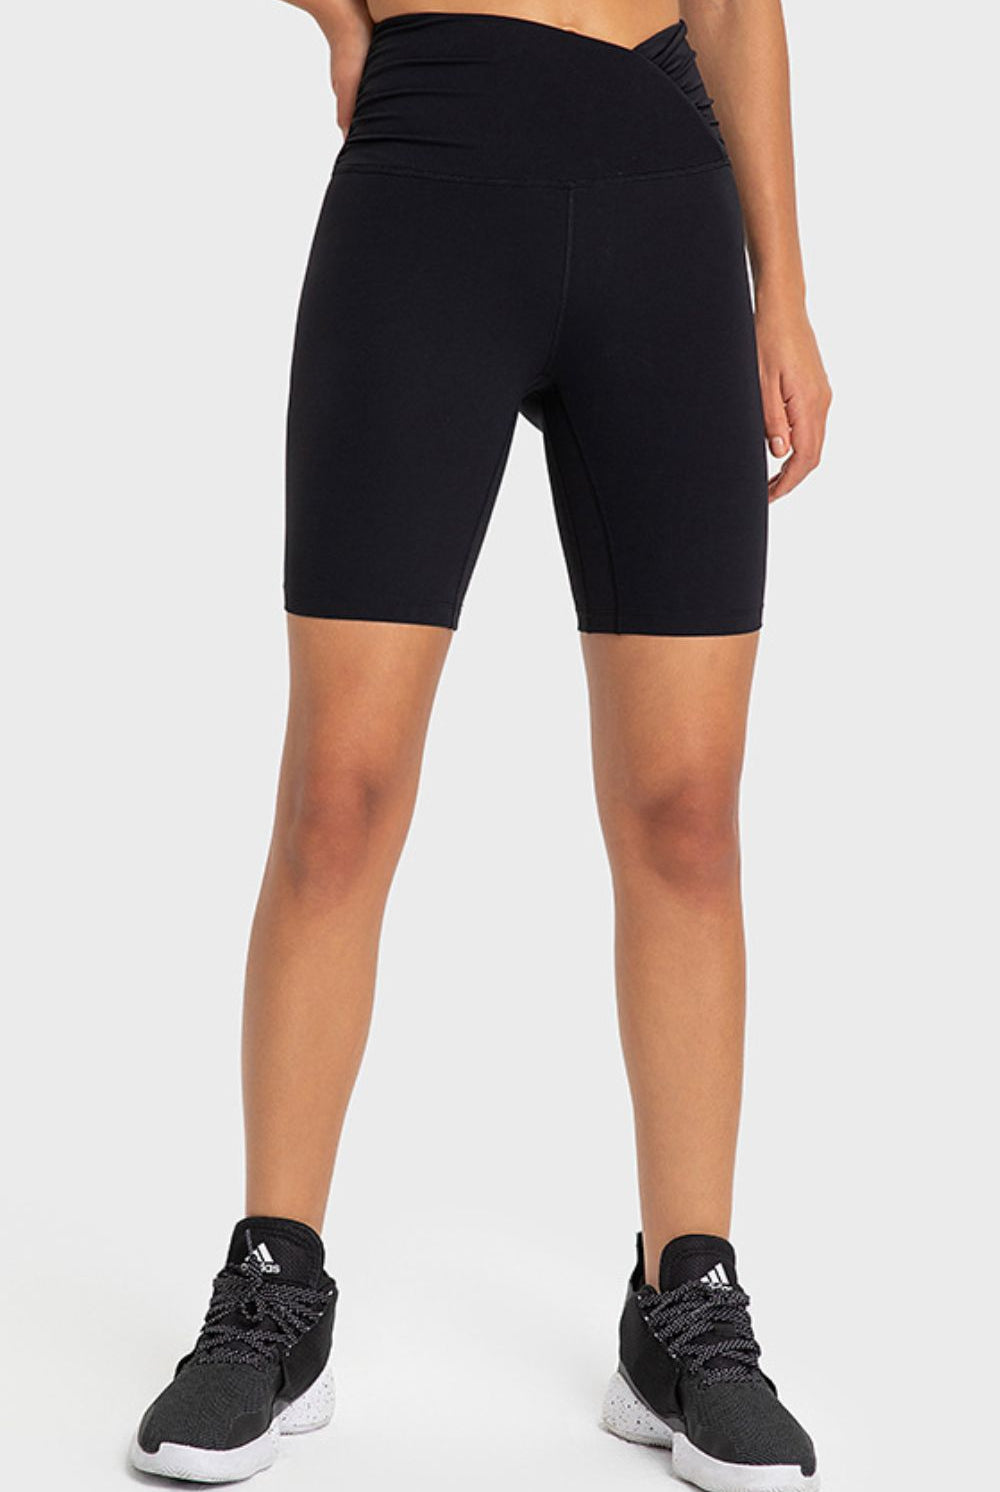 Black V-Waist Biker Shorts activewear